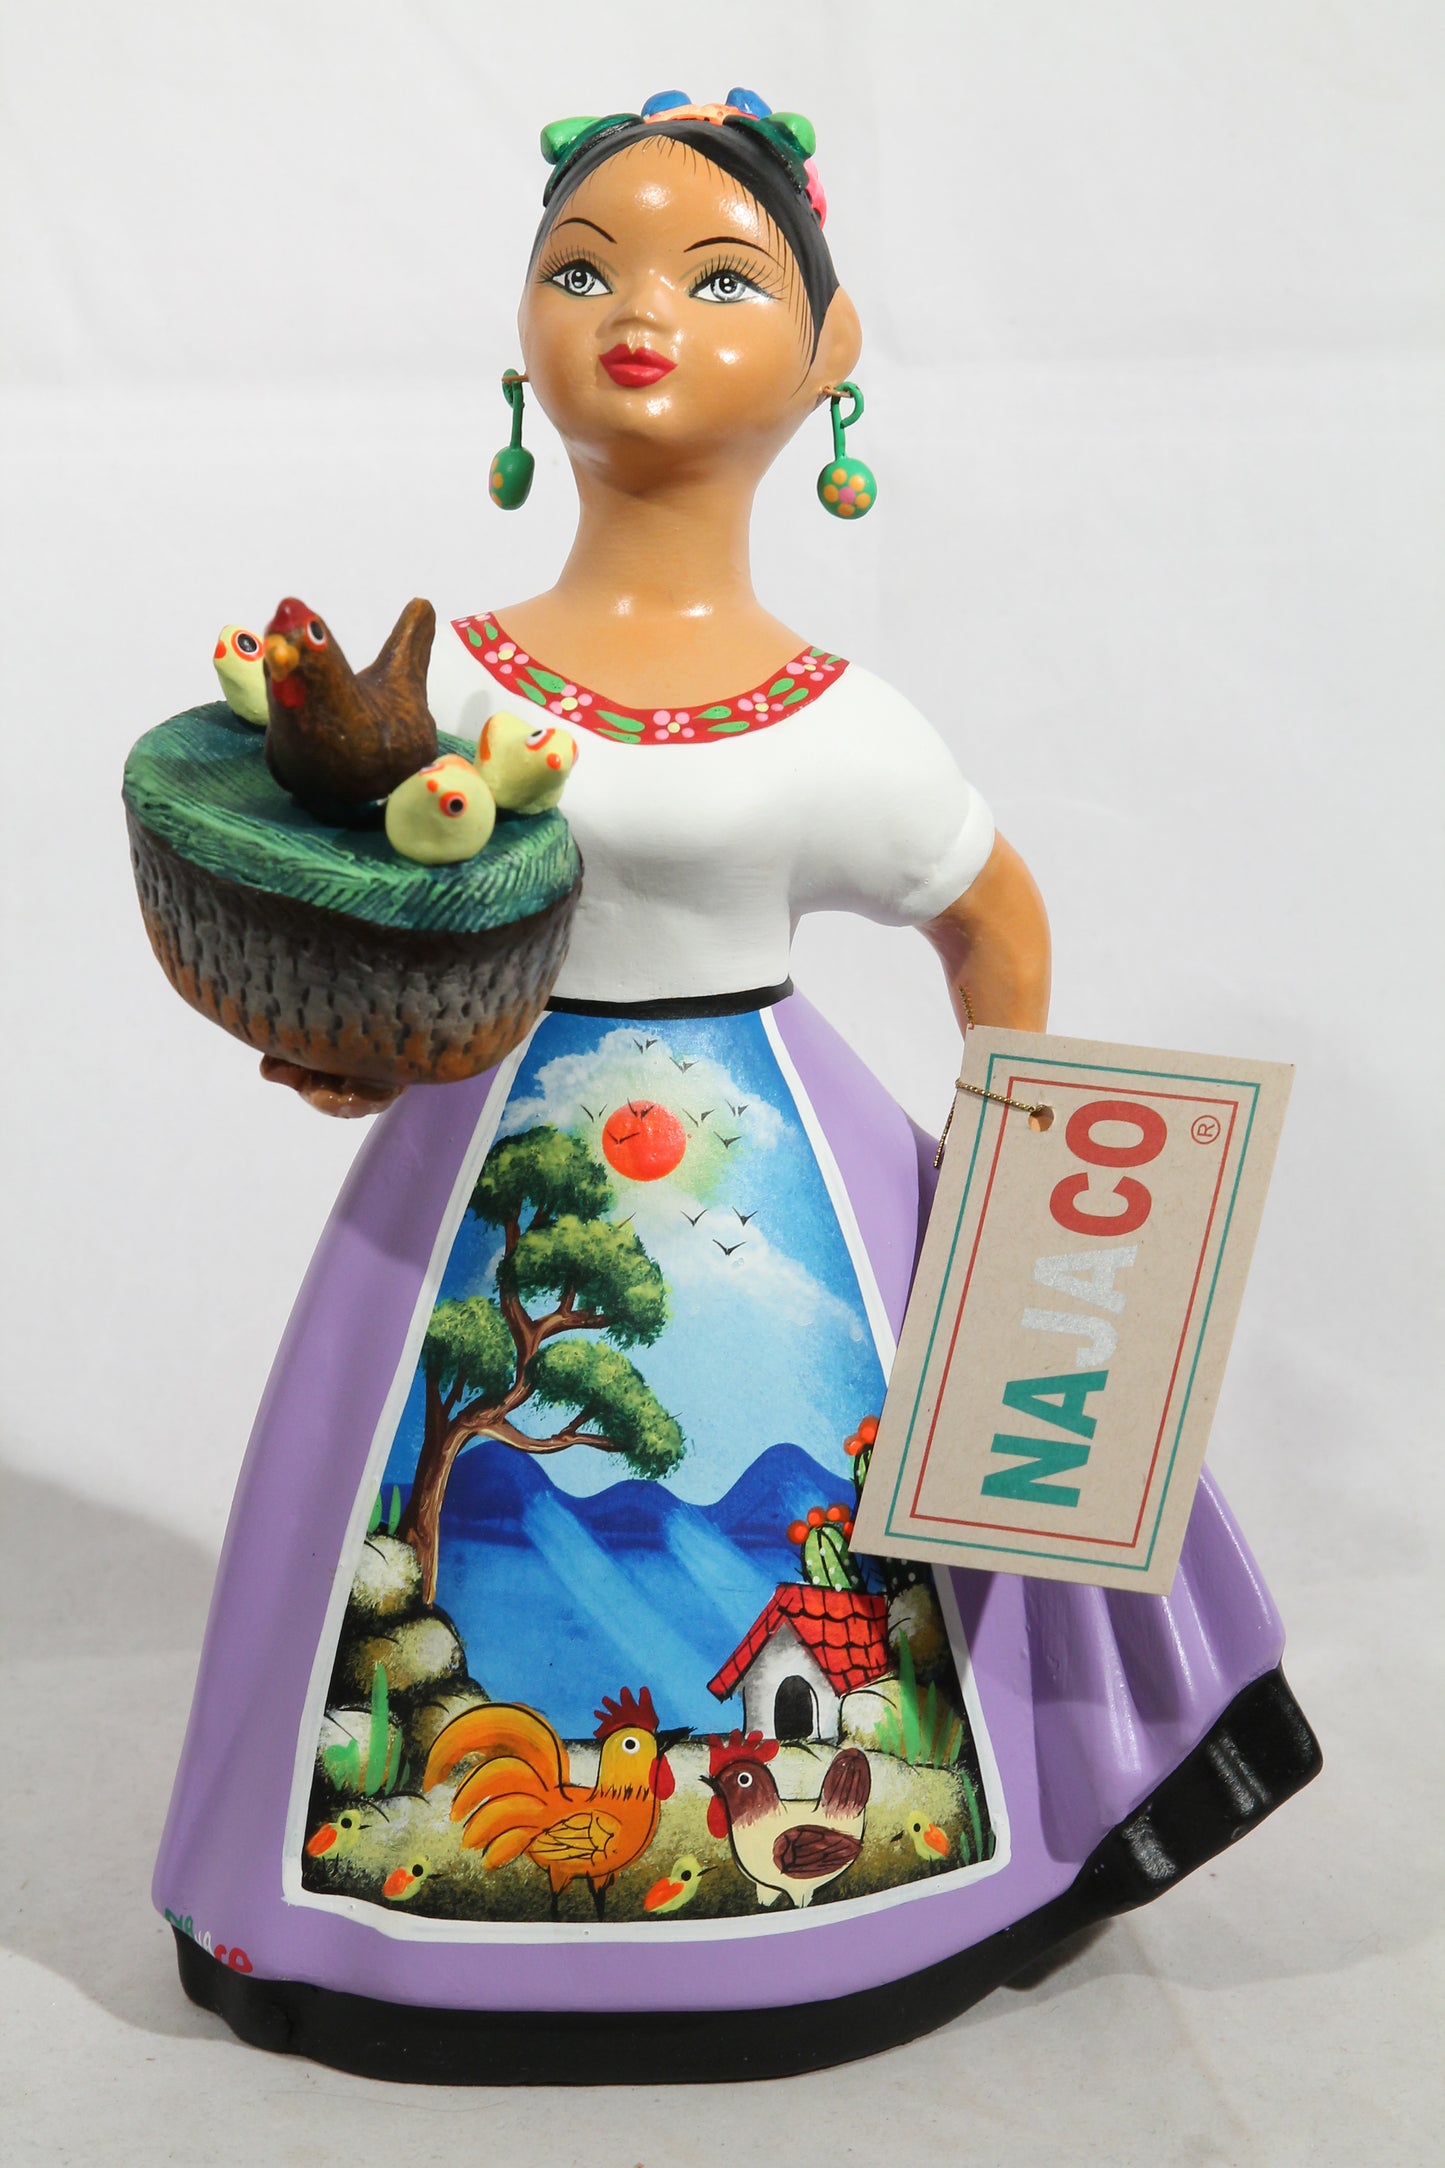 Najaco Lupita Figurine Ceramic Mexican Folk Art Bskt/Chickens Espanola Lilac #2